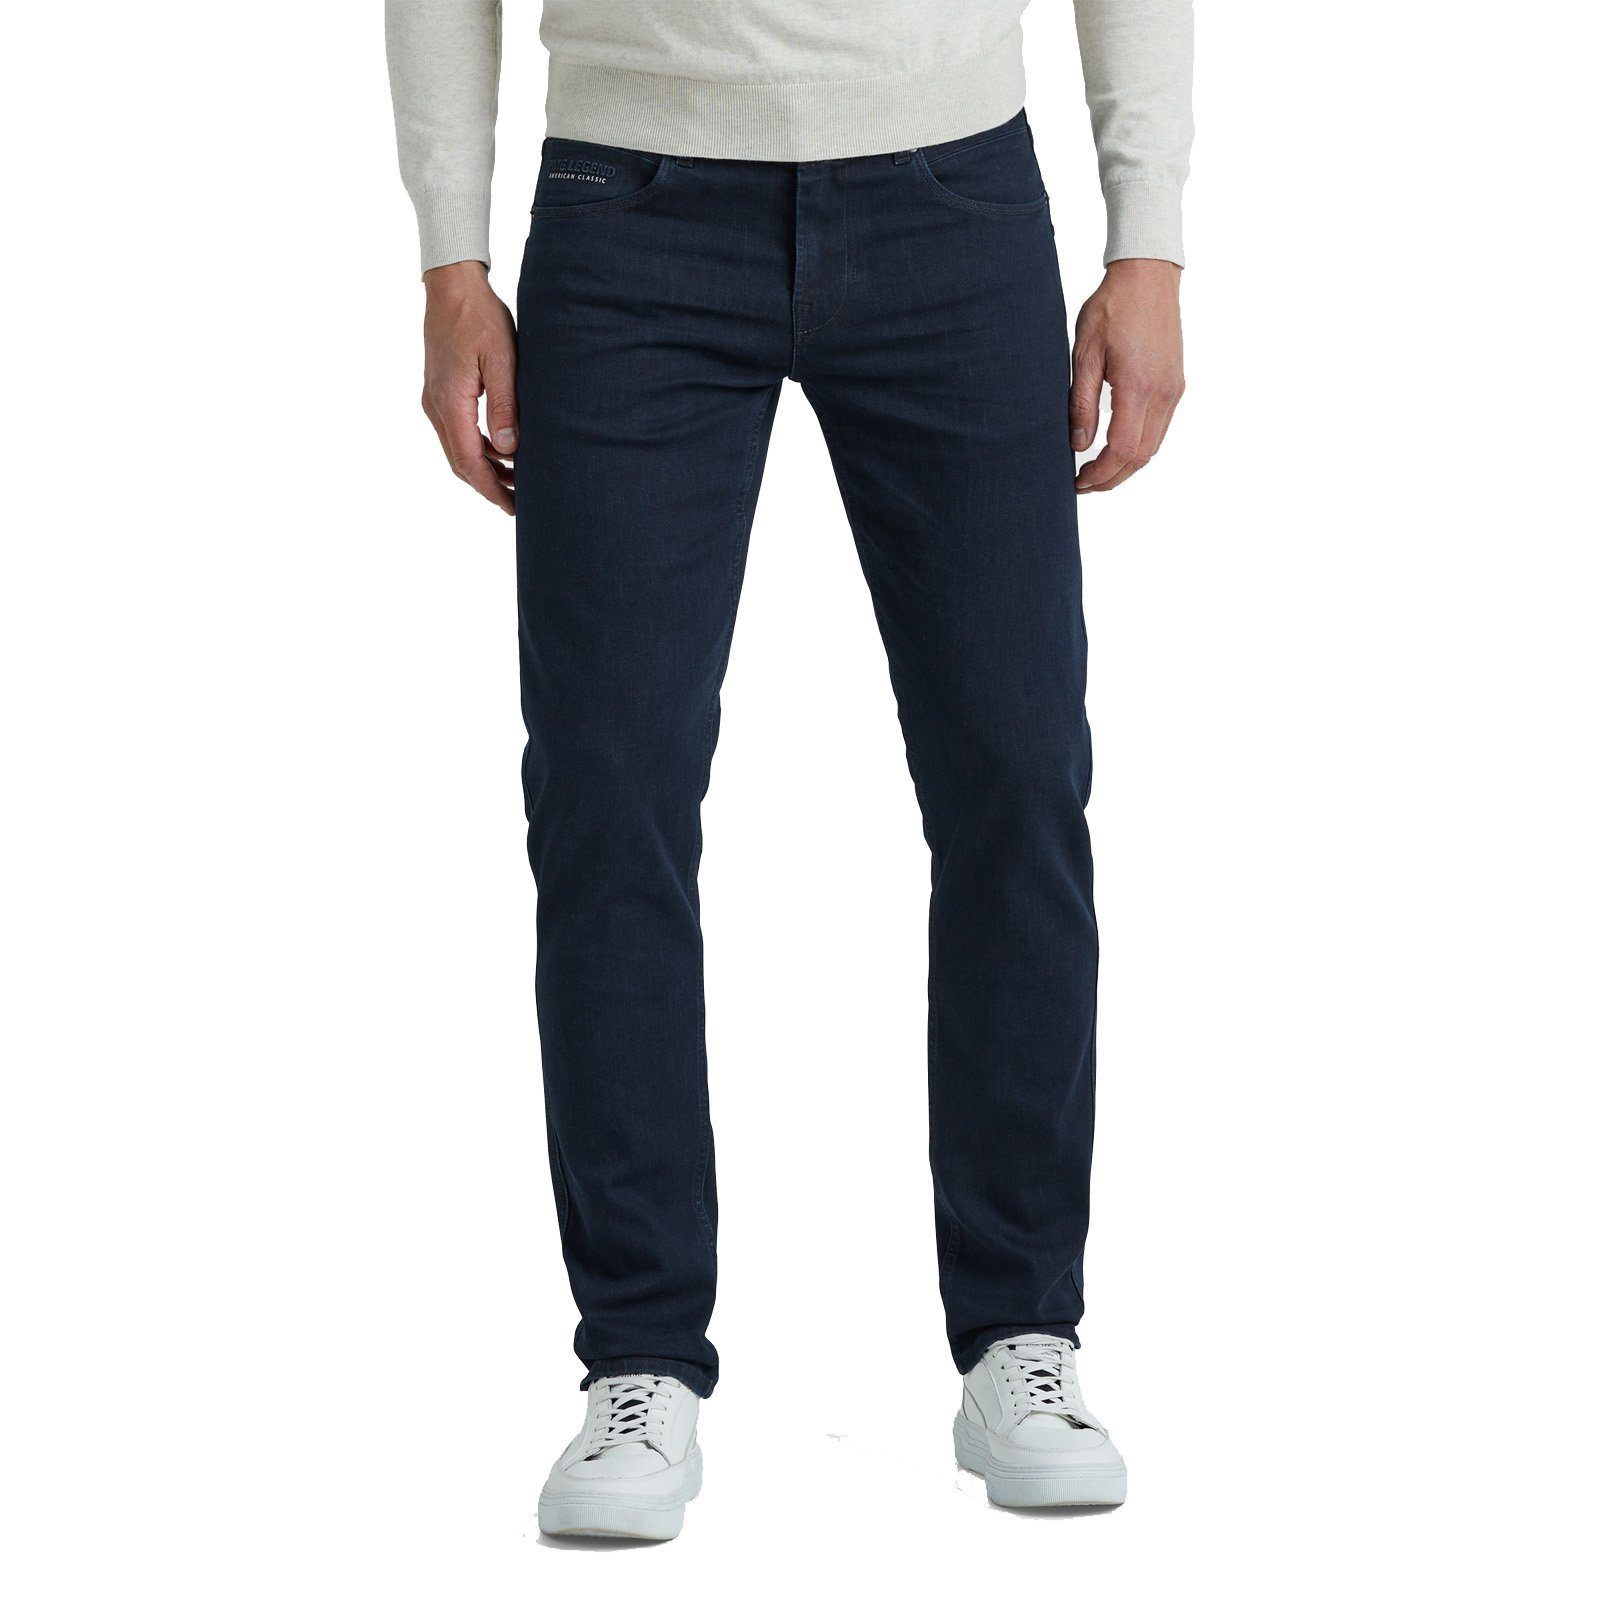 PME LEGEND Herren dark Jeans Nightflight 5-Pocket-Jeans